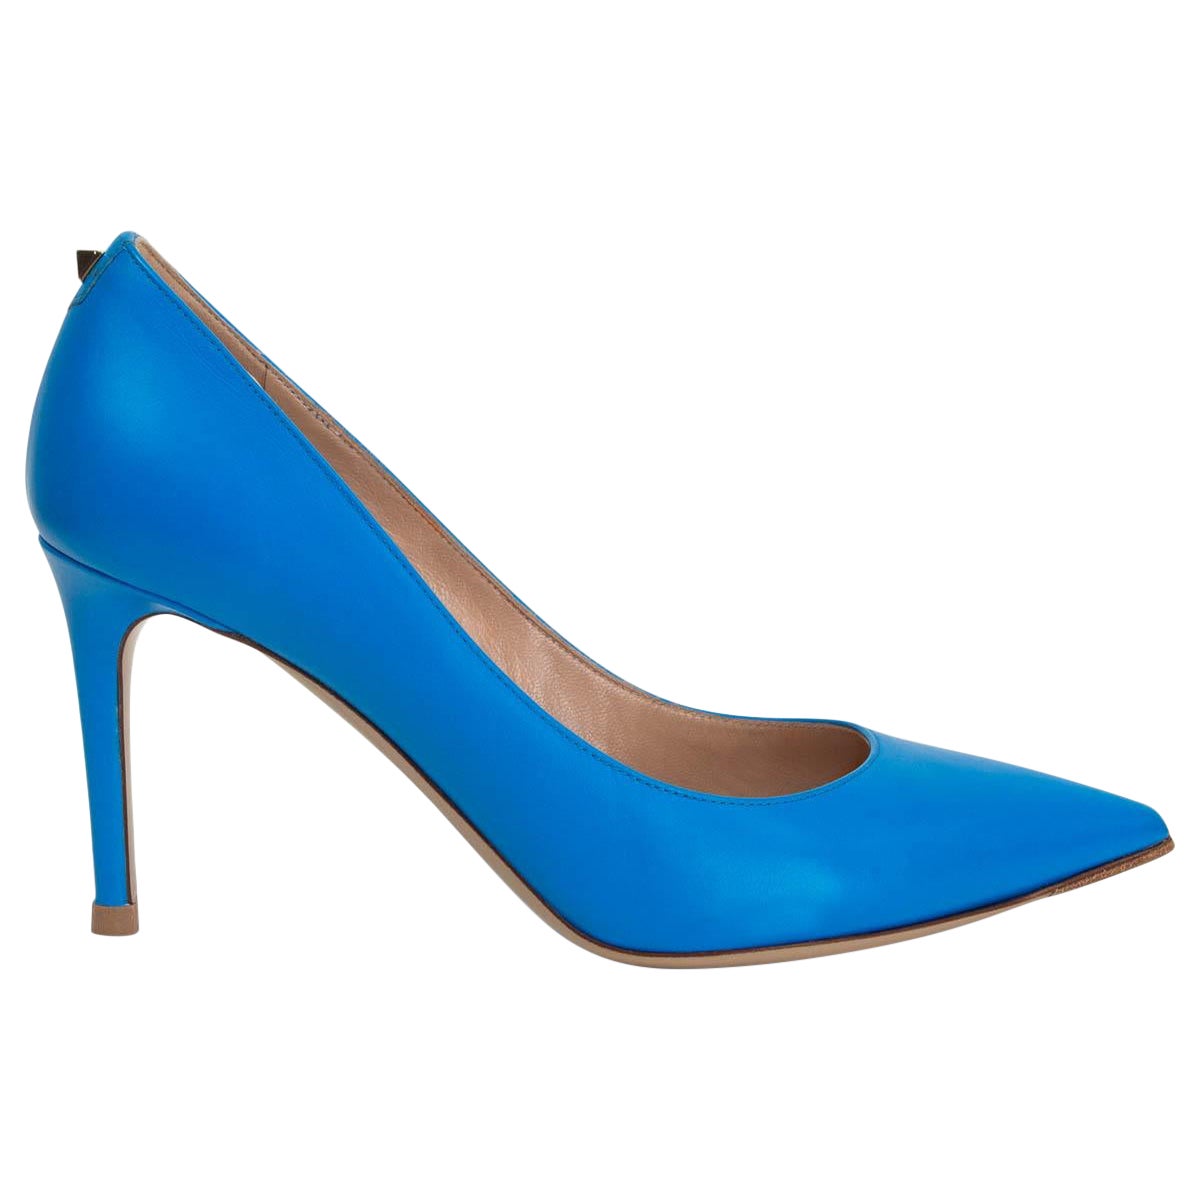 VALENTINO bleu cyan cuir ROCKSTUD 85 Pointed Toe Pumps Shoes 37.5